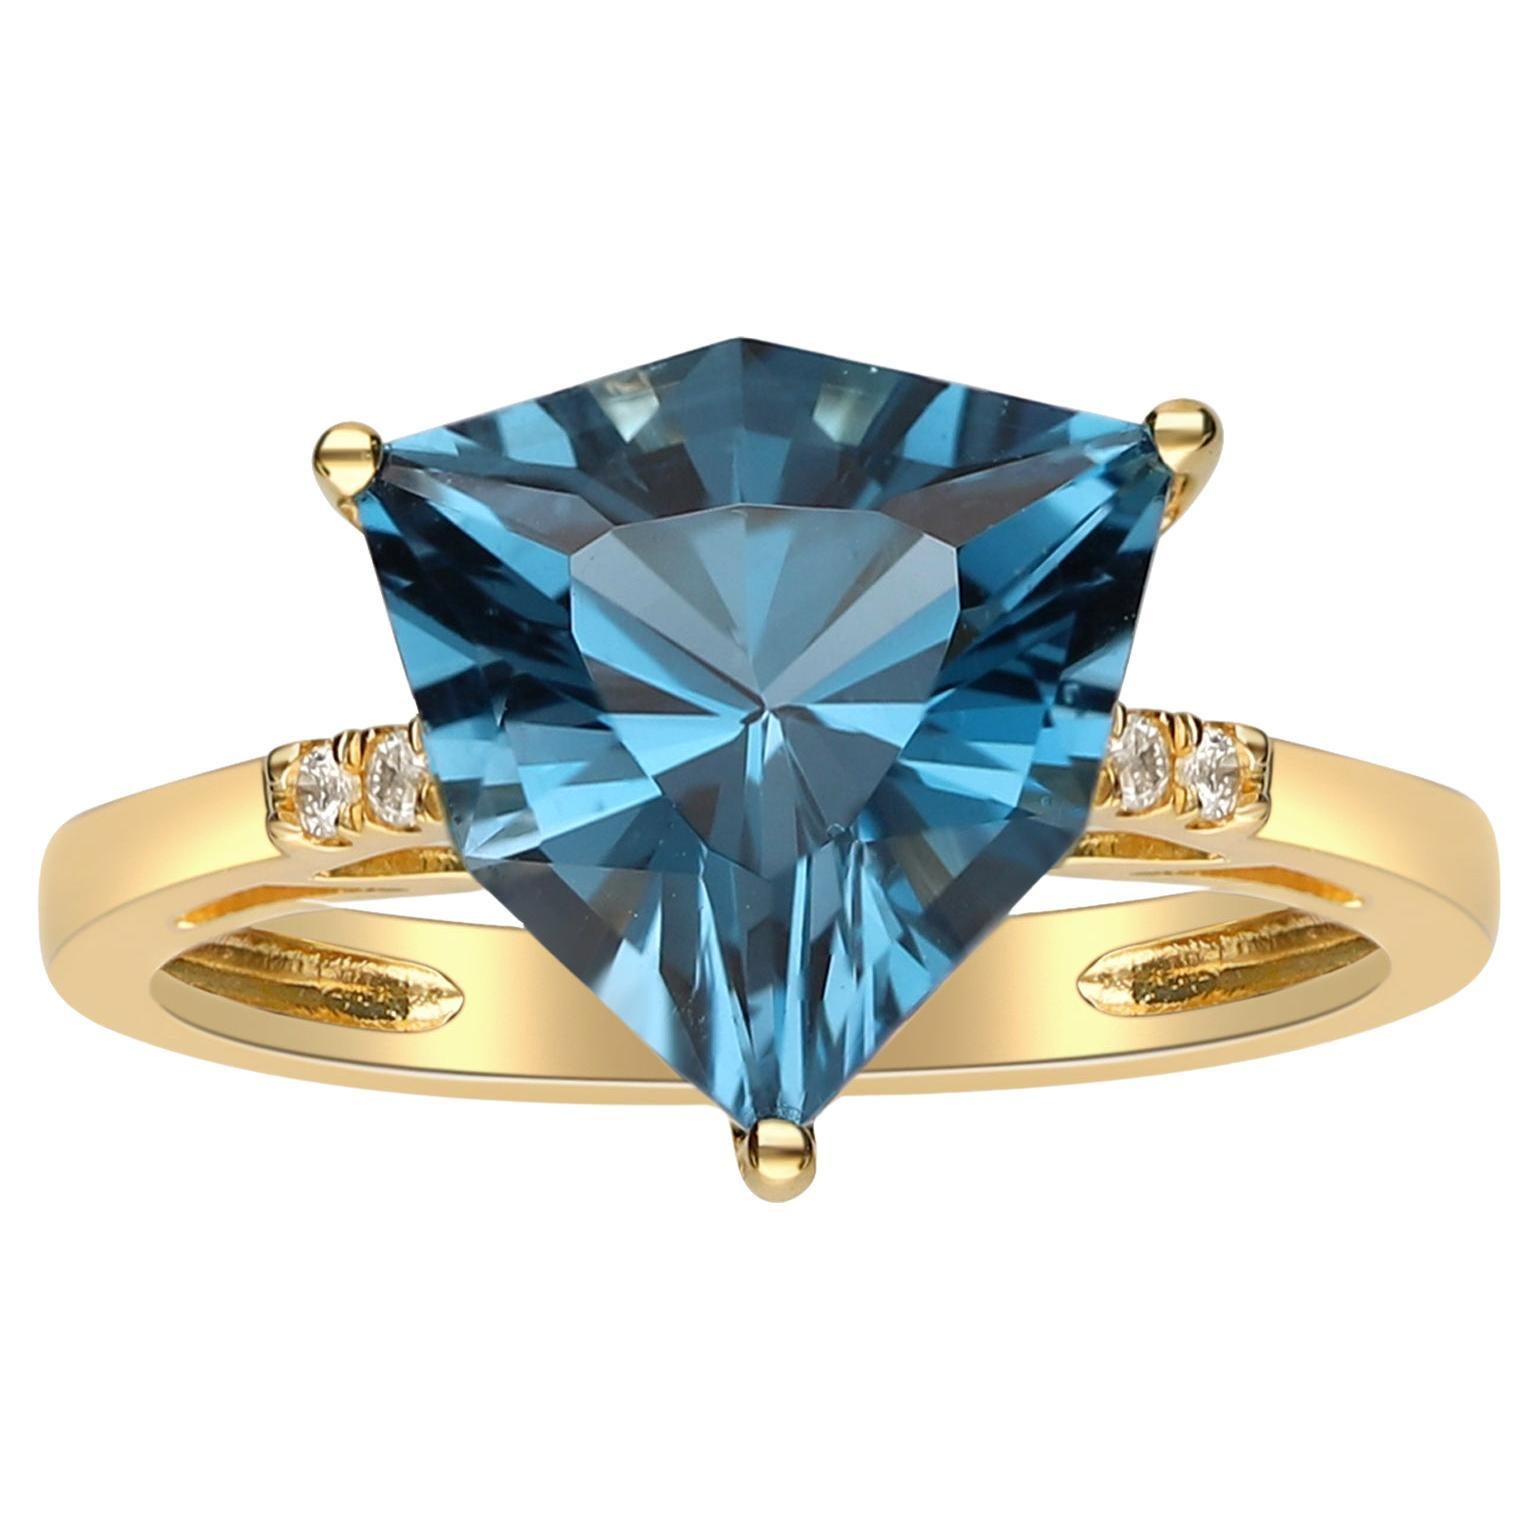 4.33 Carat Fancy-Cut Trillion London Blue Topaz Diamond Accents 14KY Gold Ring For Sale